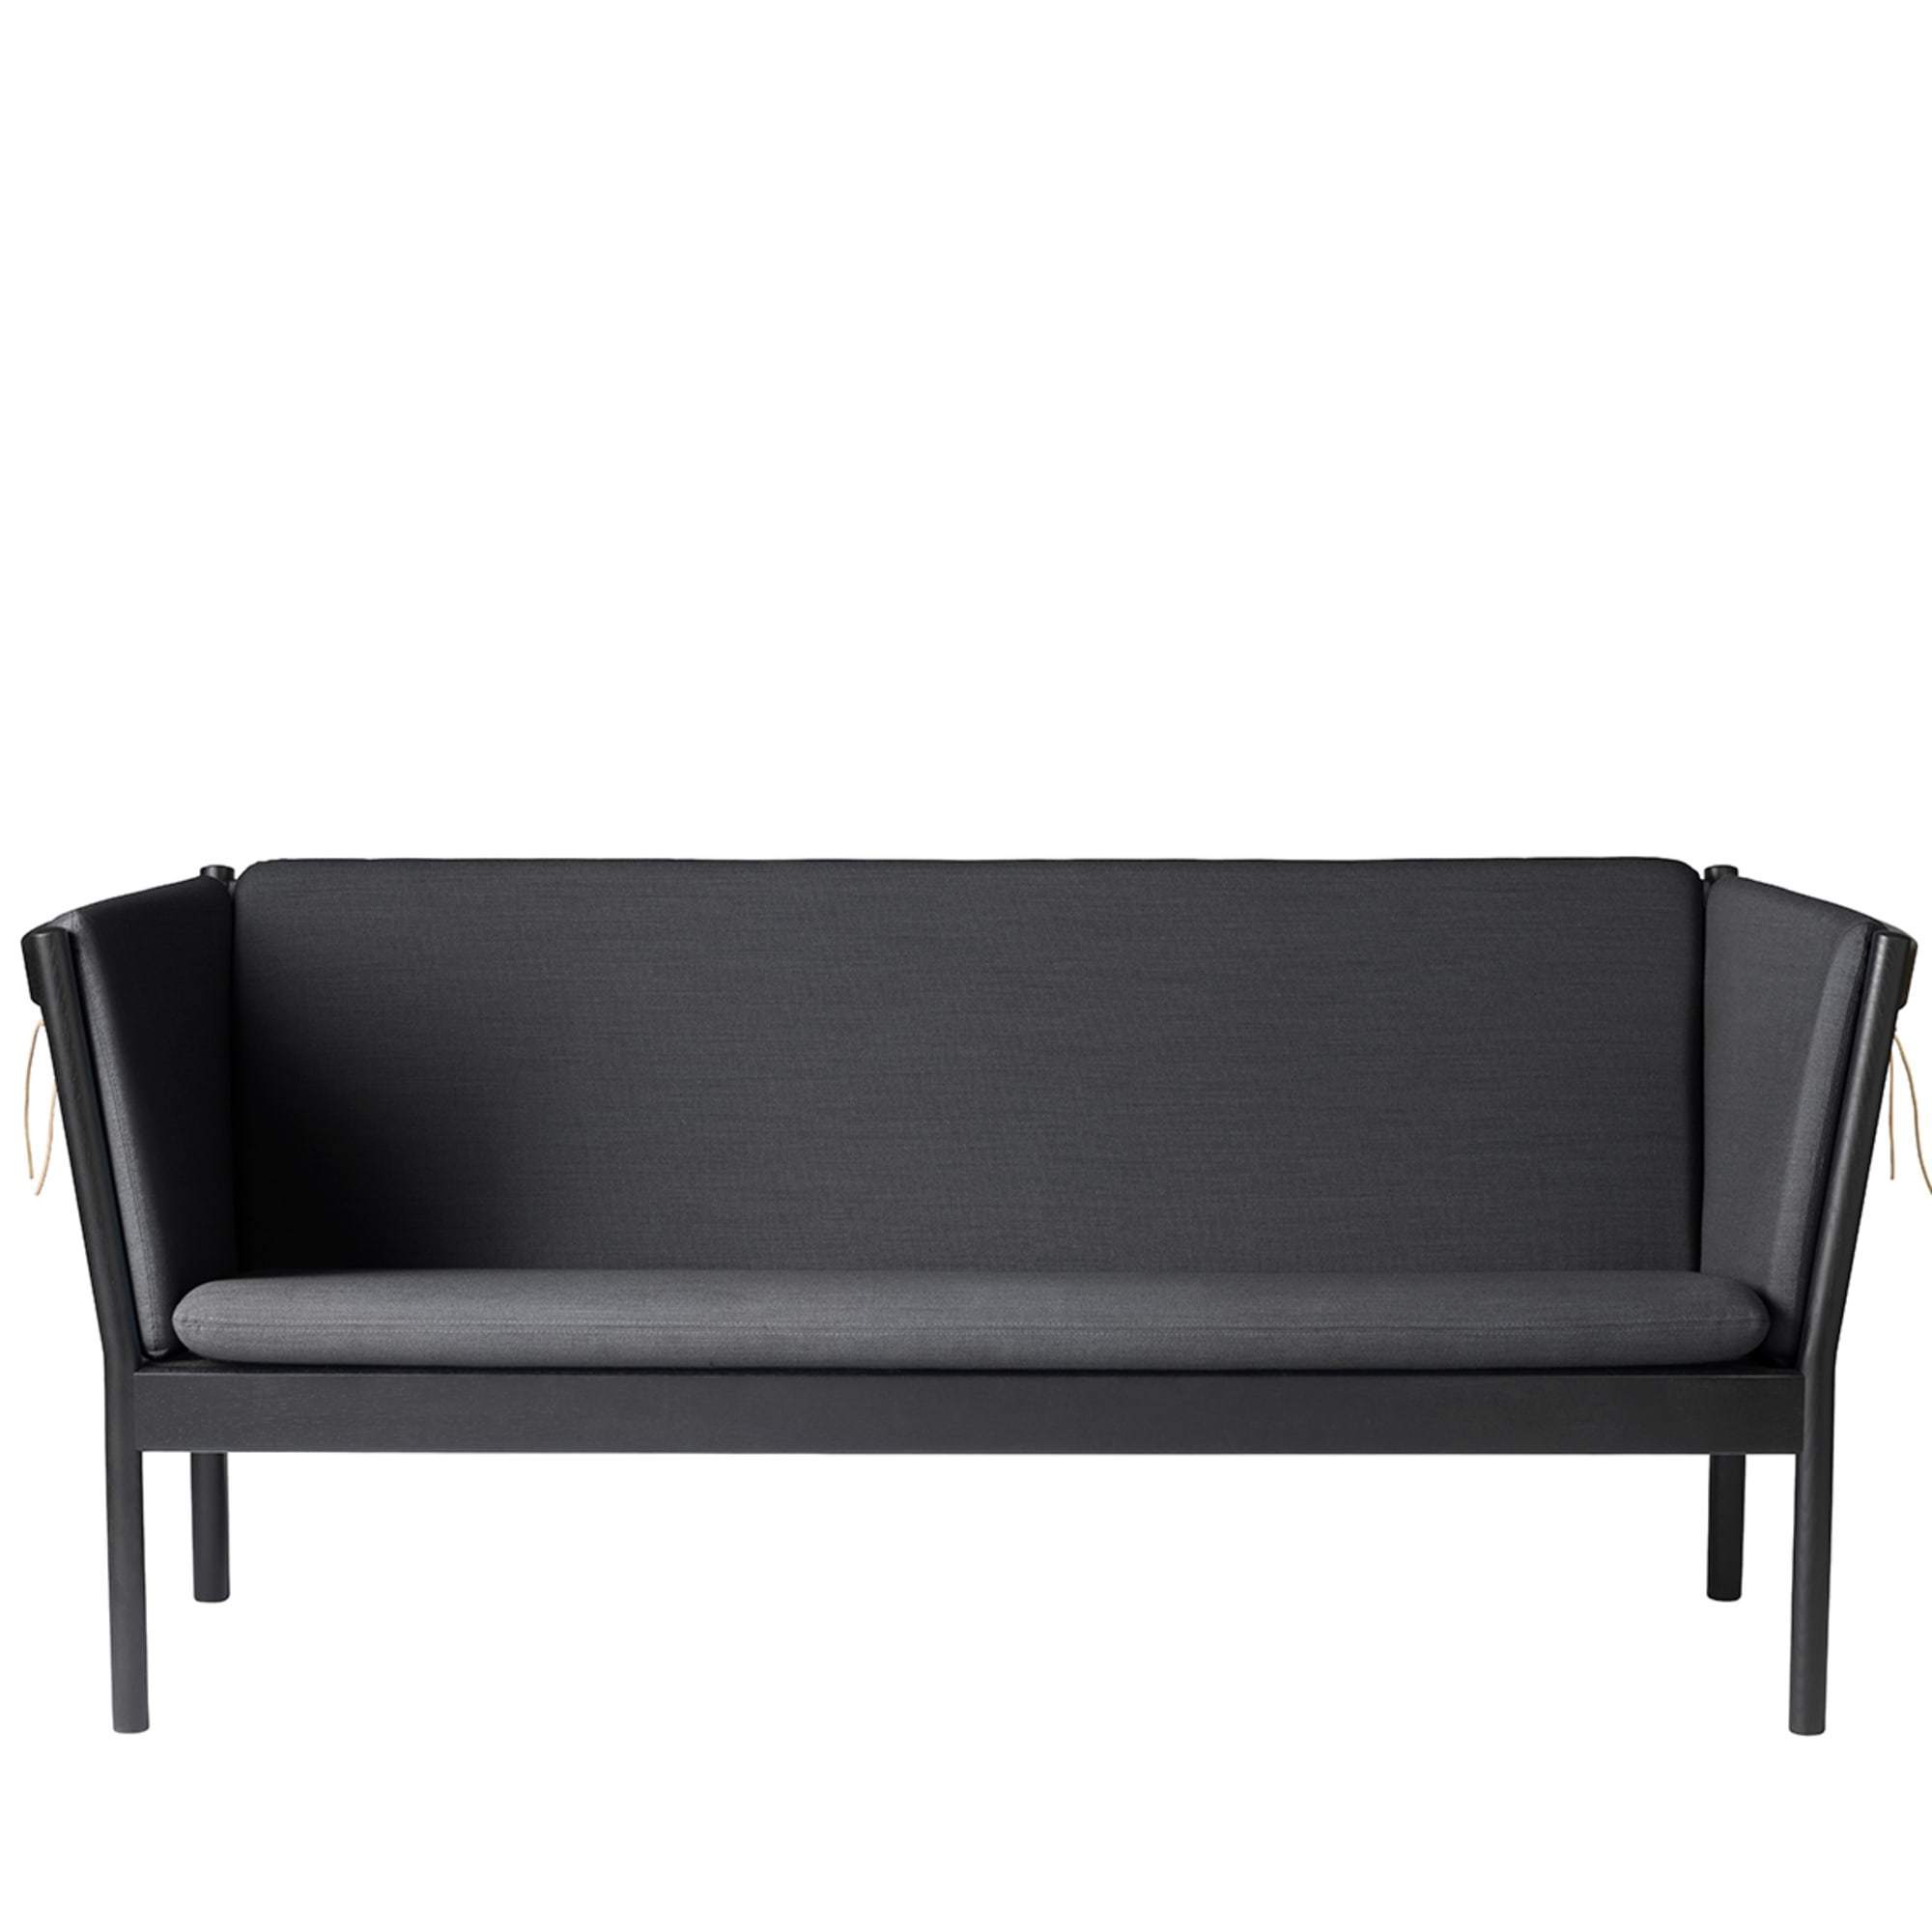 Fdb Møbler J149 3 Person Sofa, Black Oak, Dark Grey Fabric